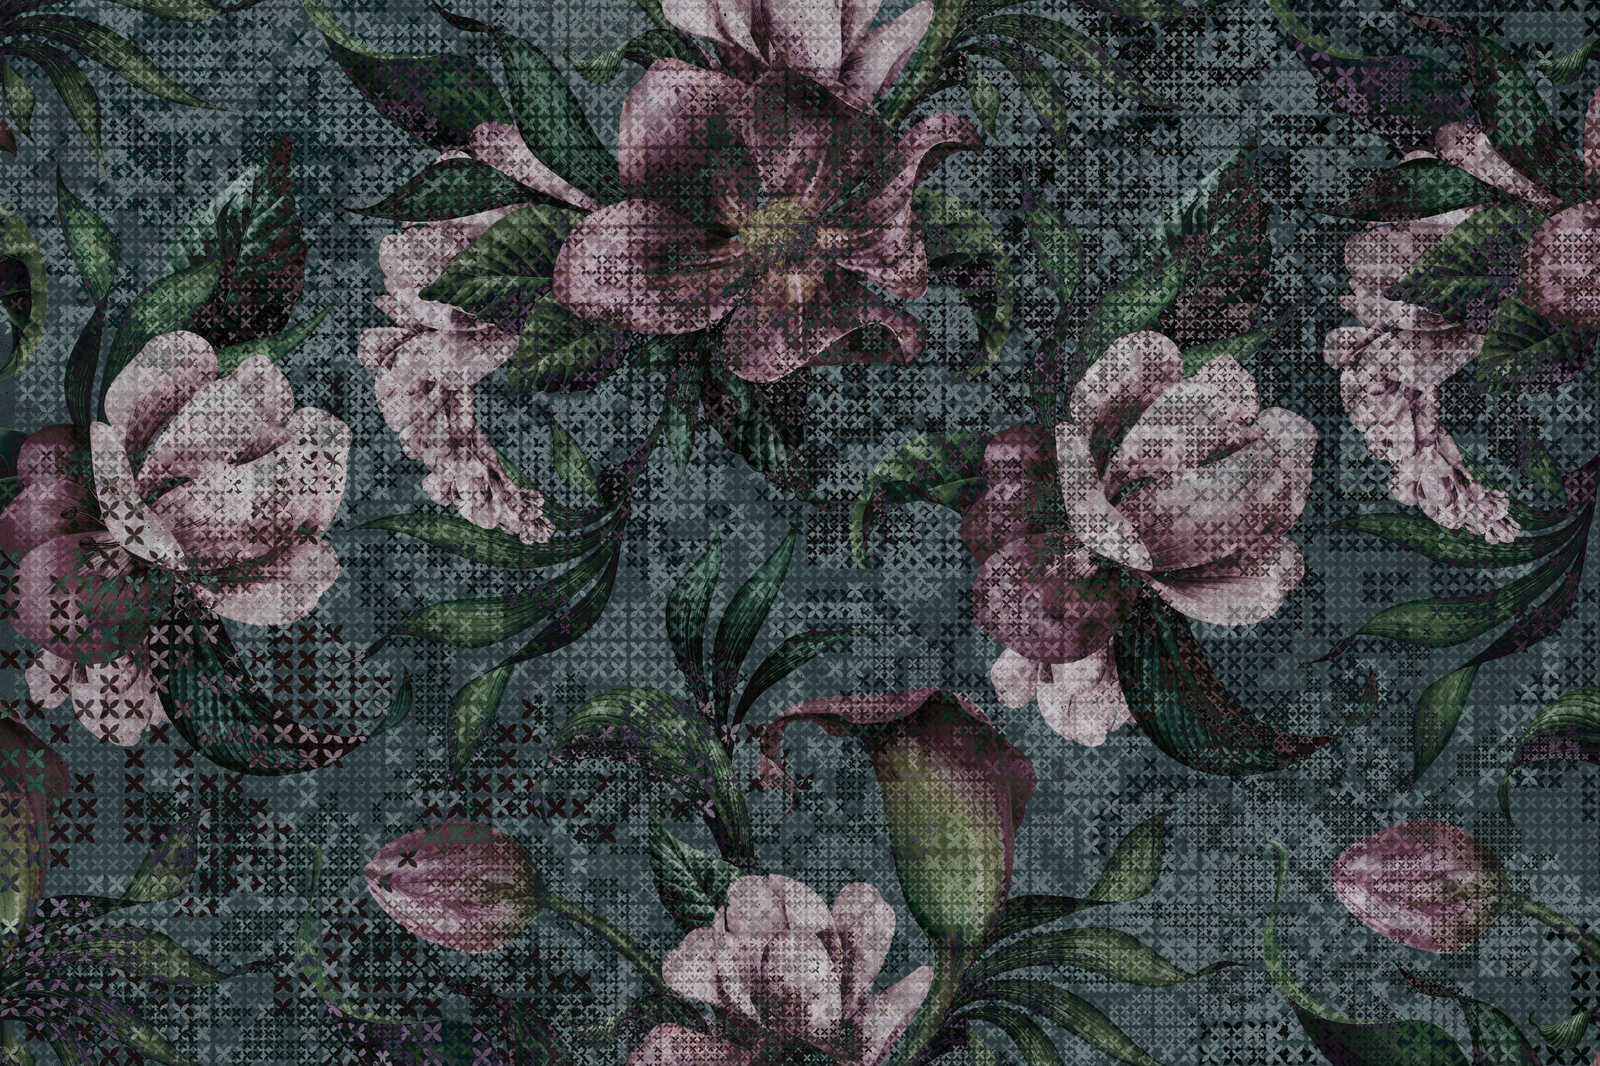             Fleurs toile Pixel Style - 0,90 m x 0,60 m
        